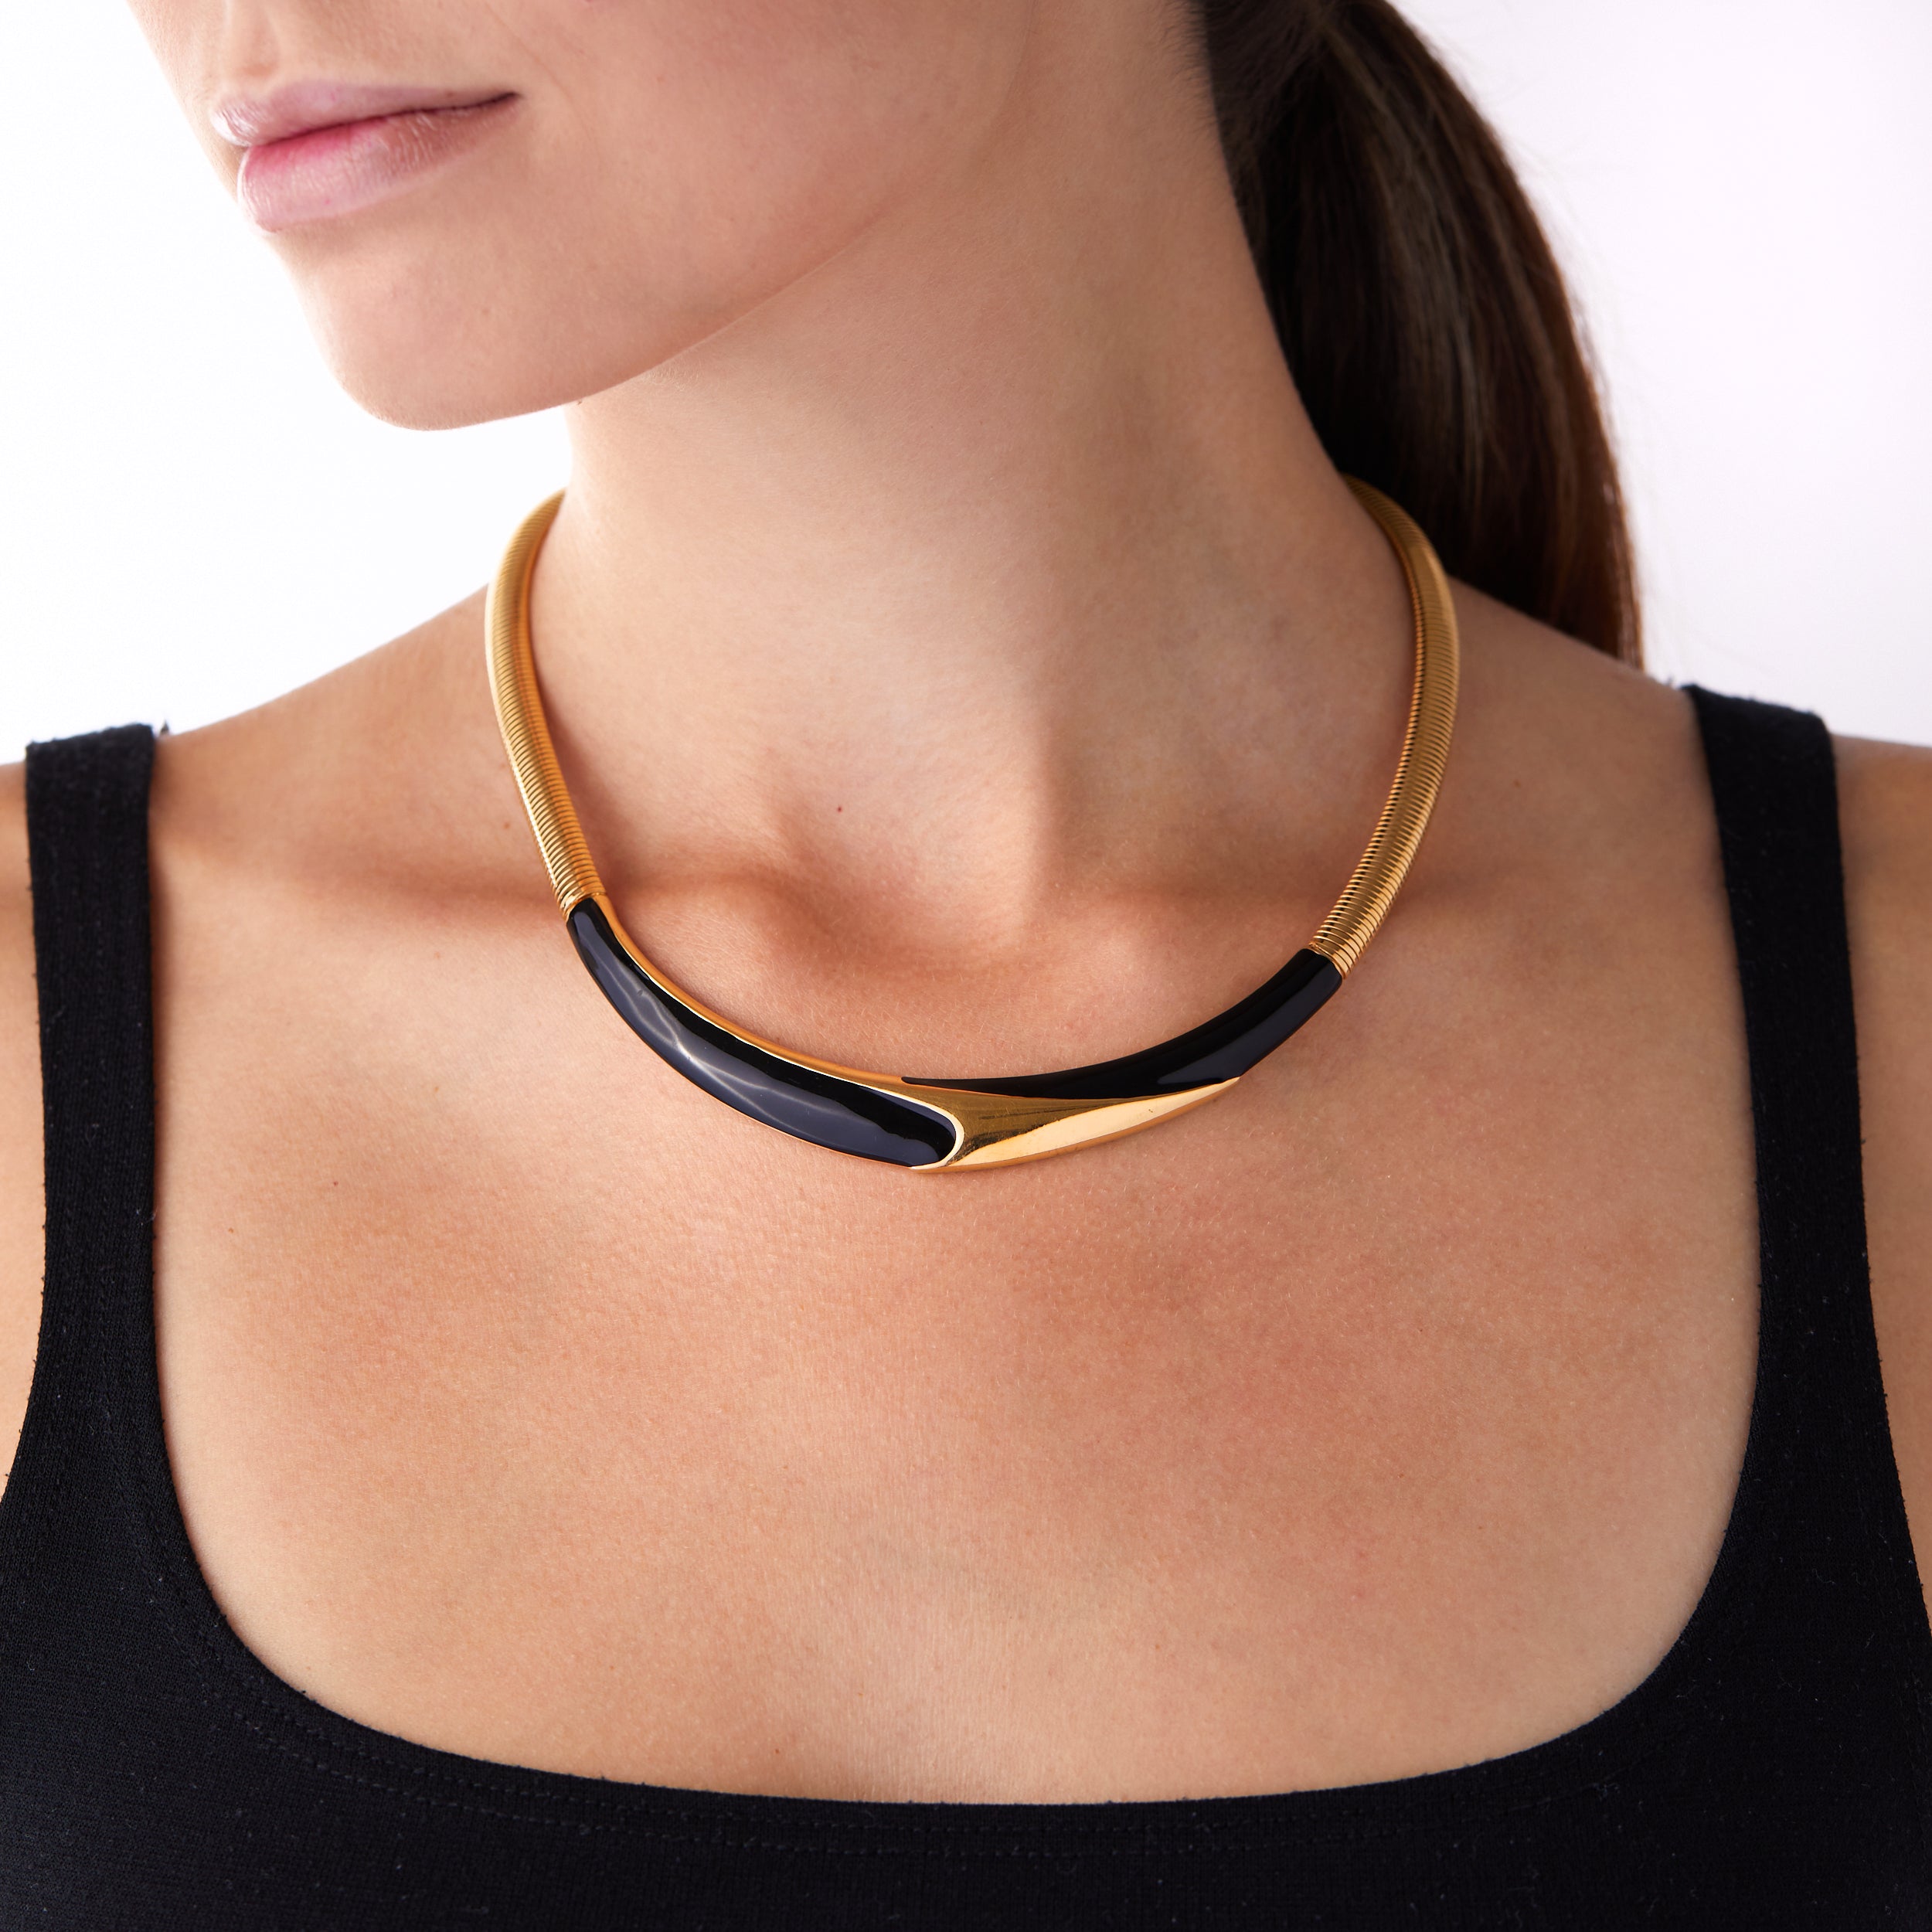 Woman’s neck wearing vintage Monet omega necklace